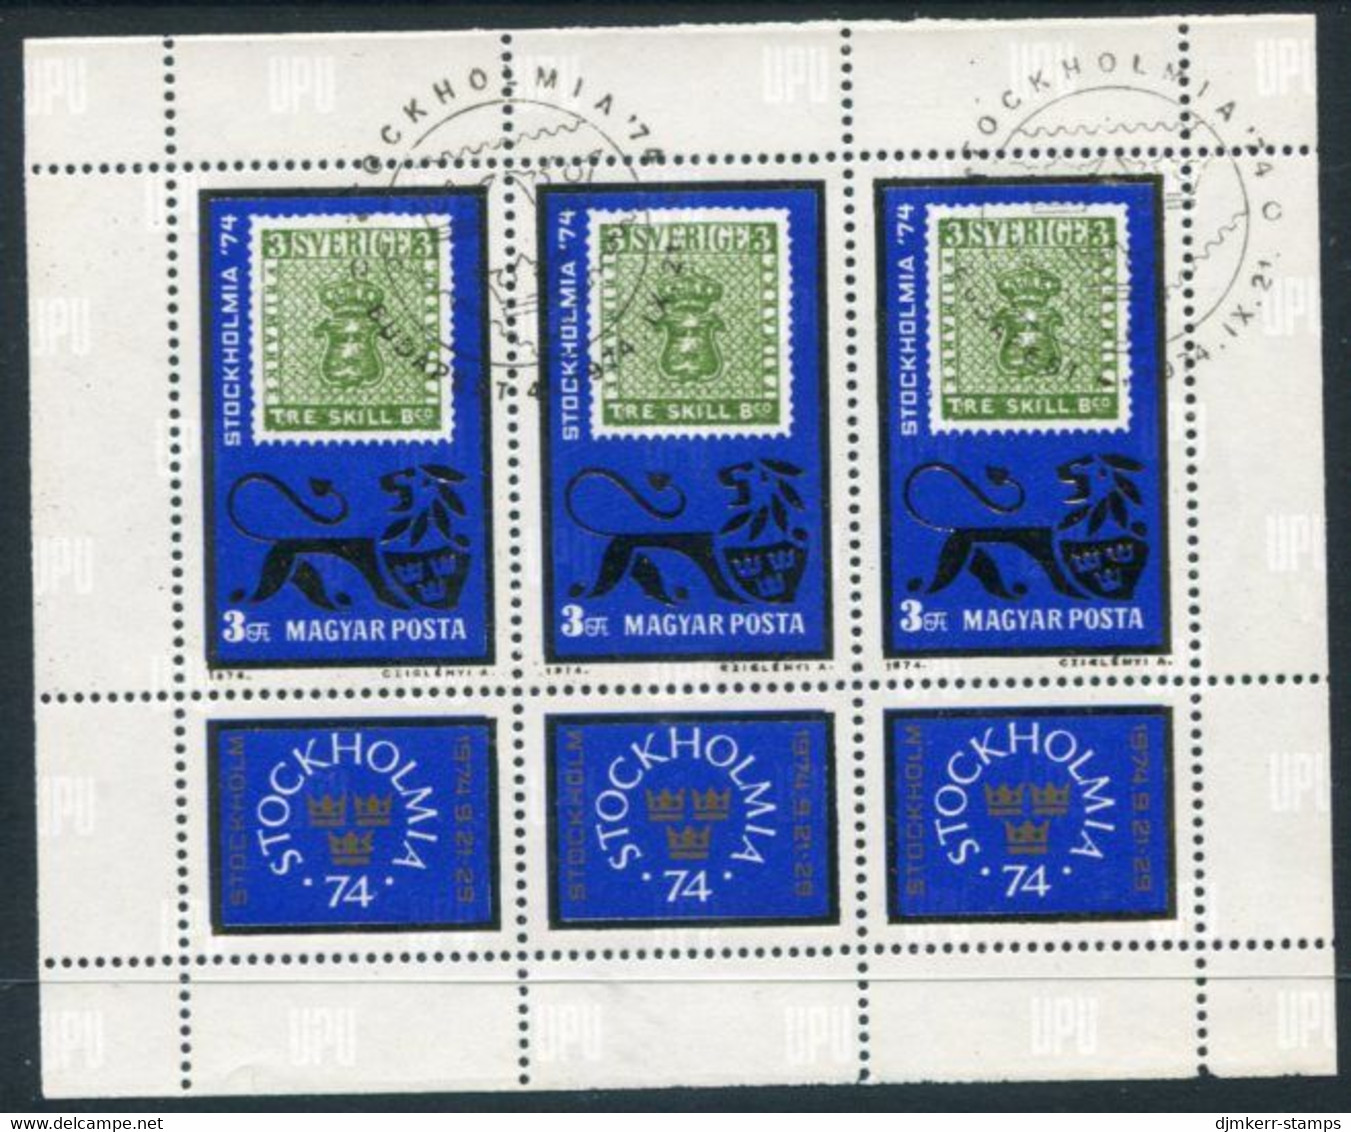 HUNGARY 1974 STOCKHOLMIA Stamp Exhibition Sheetlet Used.  Michel 2981 Kb - Blocks & Sheetlets